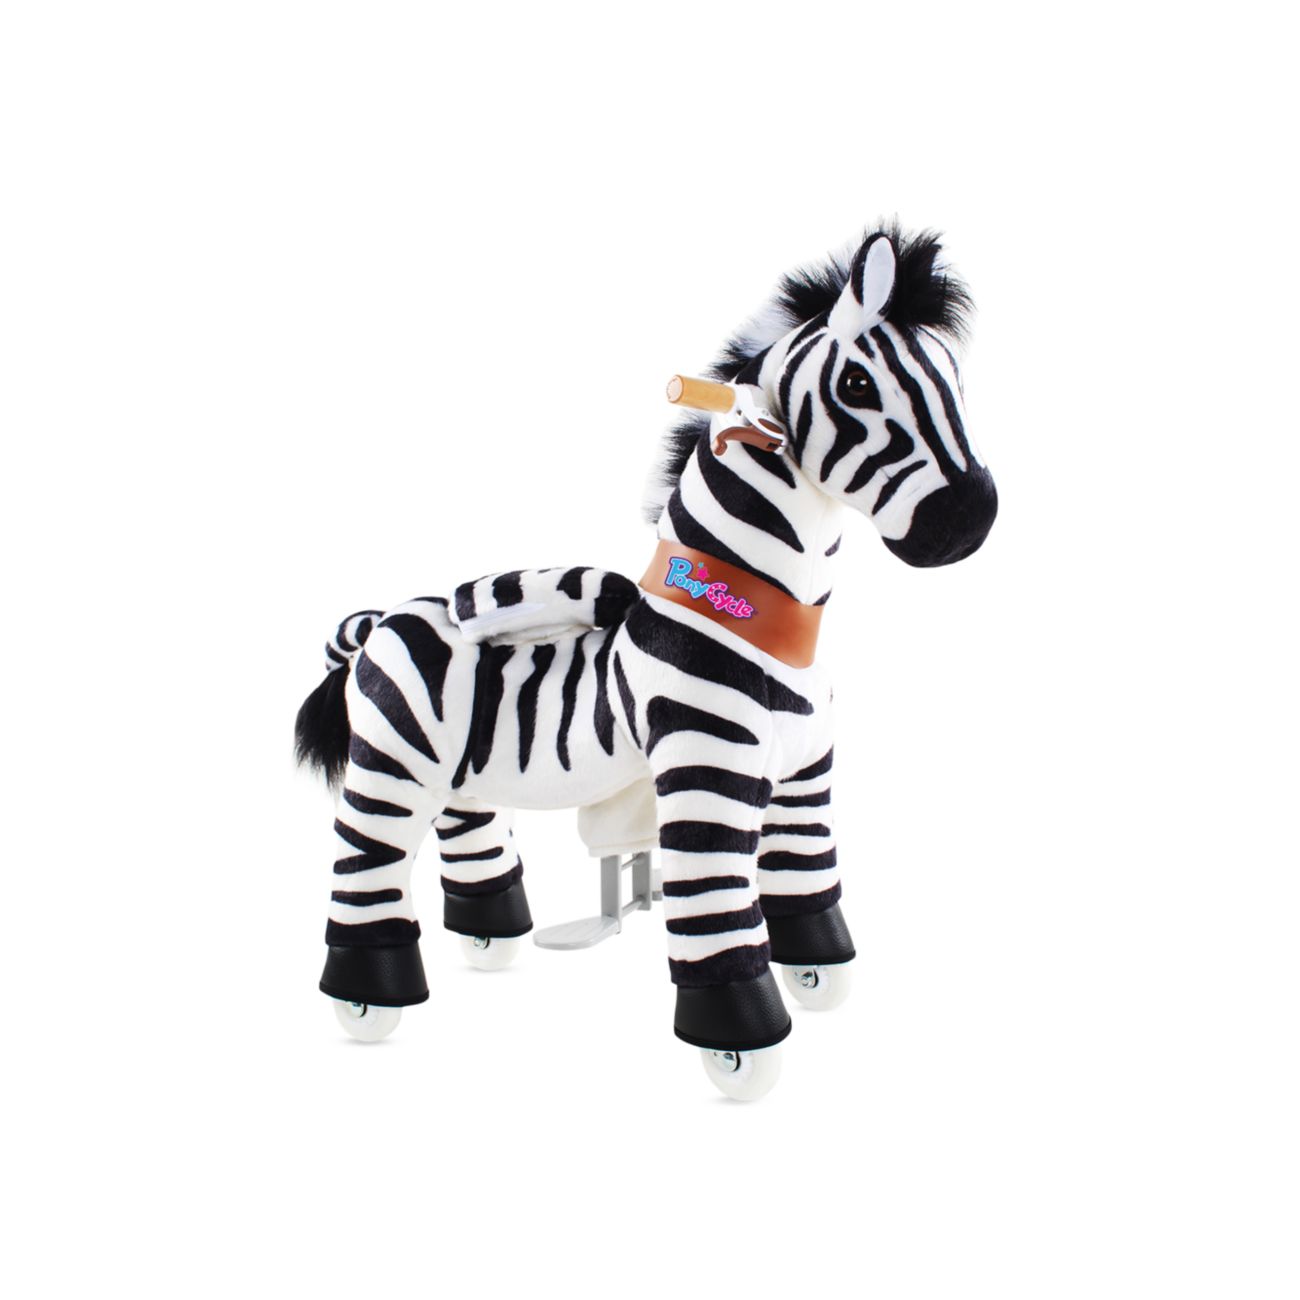 Little Kid's Ride On Zebra Toy PonyCycle